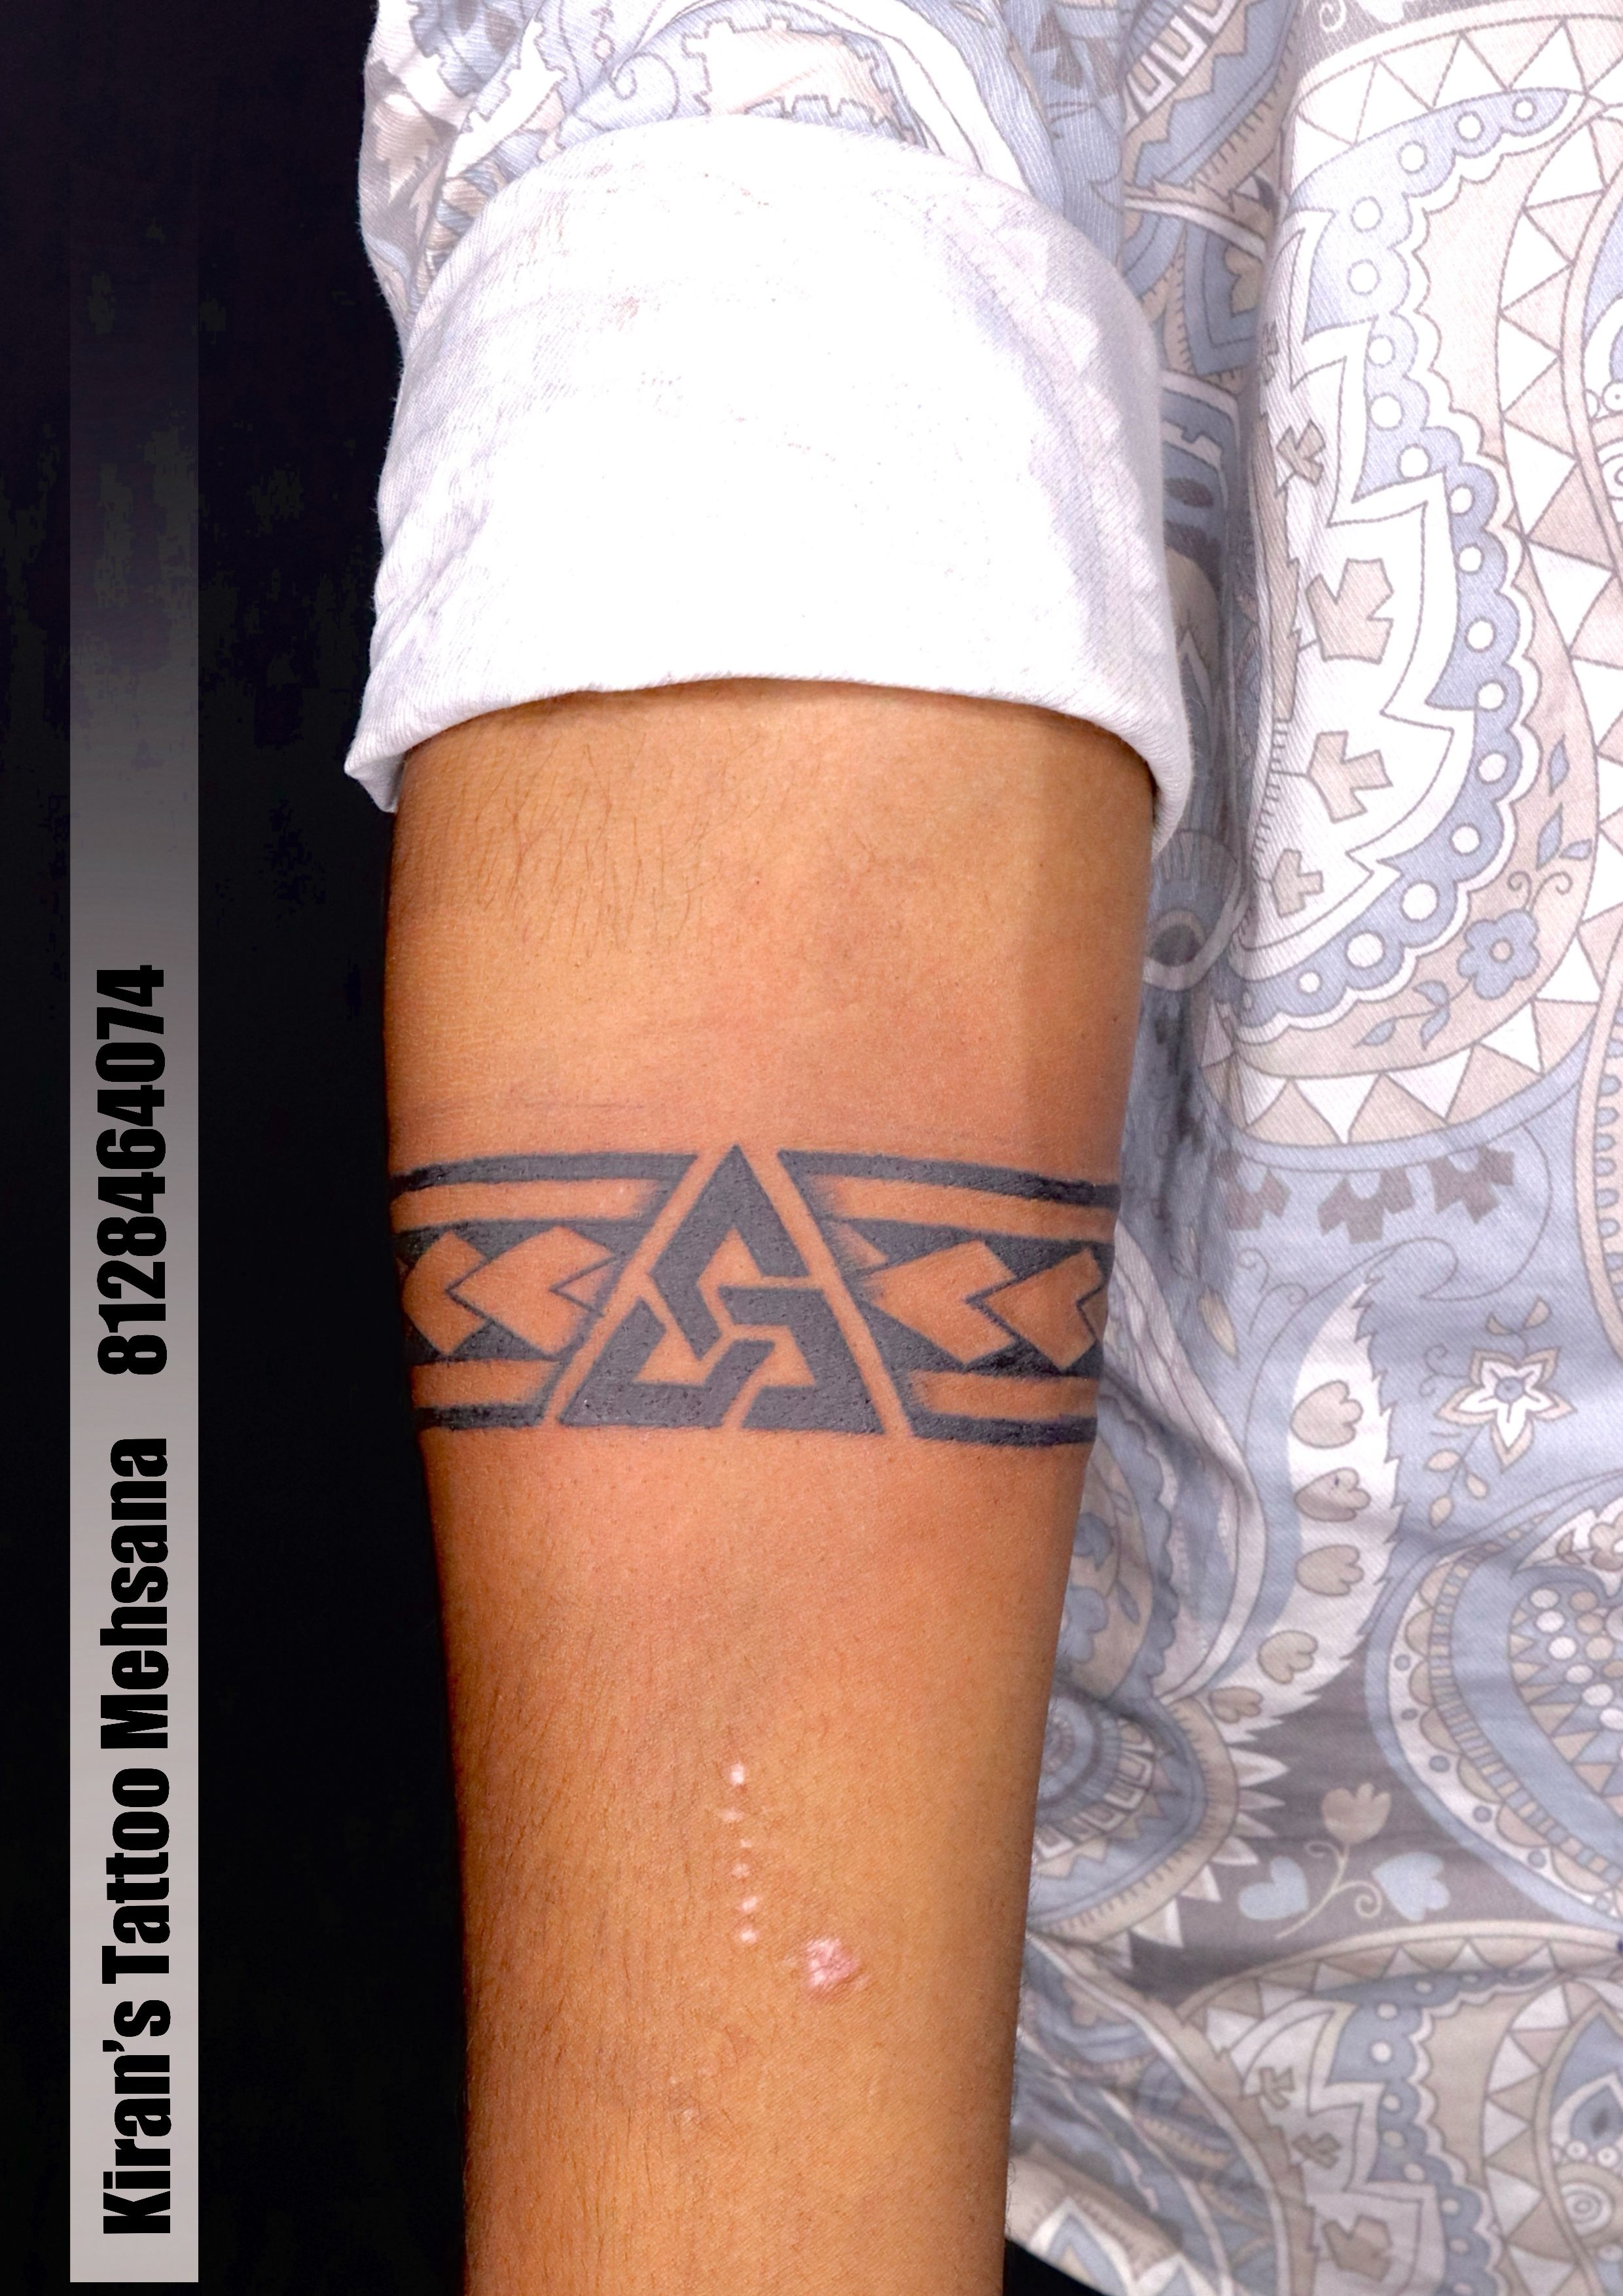 VOORKOMS God Tribal Hand Band Tattoo Waterproof Men and Women Temporary  Body Tattoo : Amazon.in: Beauty